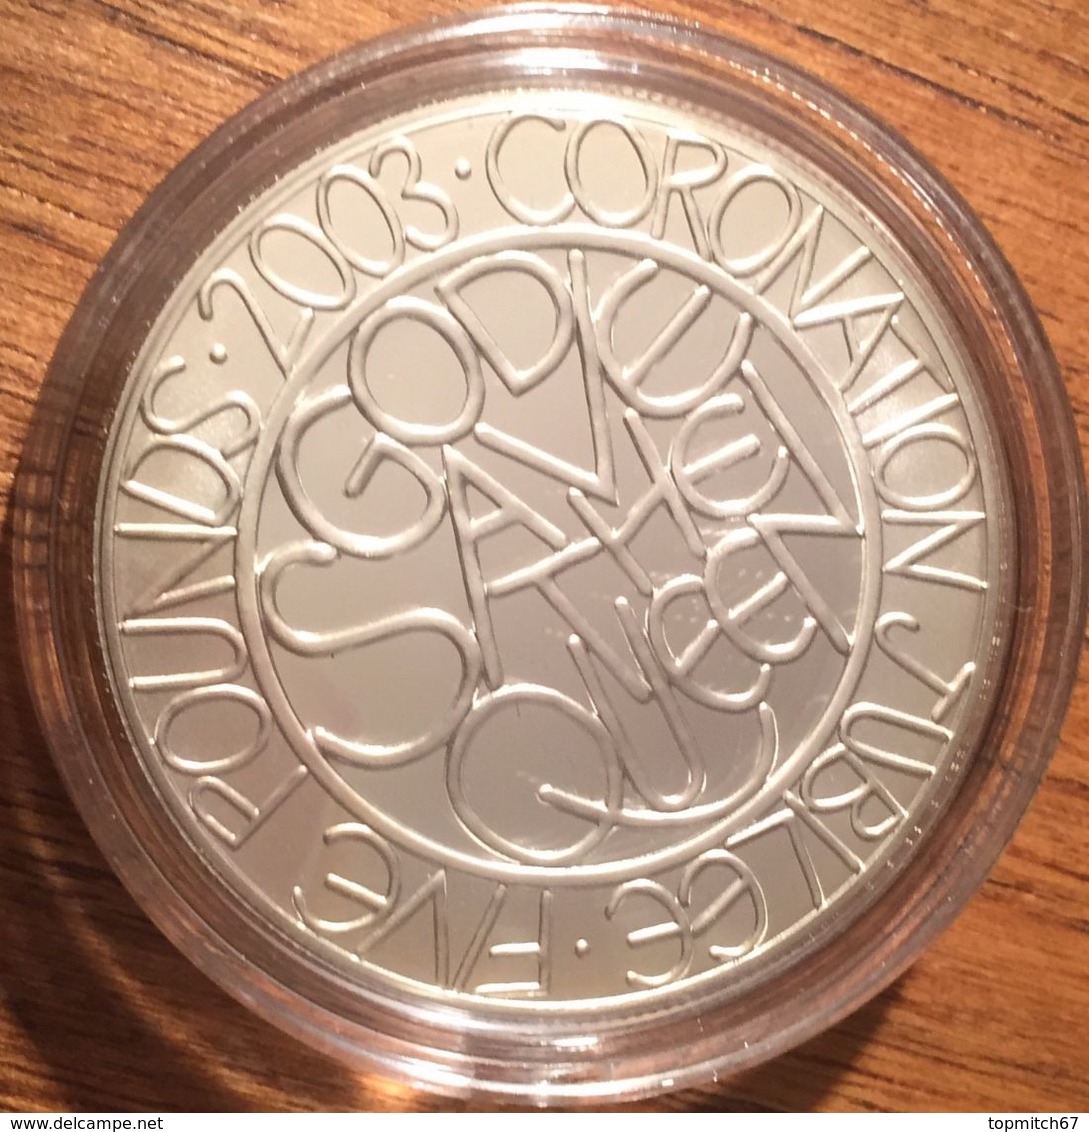 $$GB850 - Queen Elizabeth II Coronation Jubilee - 5 Pounds Silver Proof Coin - Great-Britain - 2003 - Mint Sets & Proof Sets